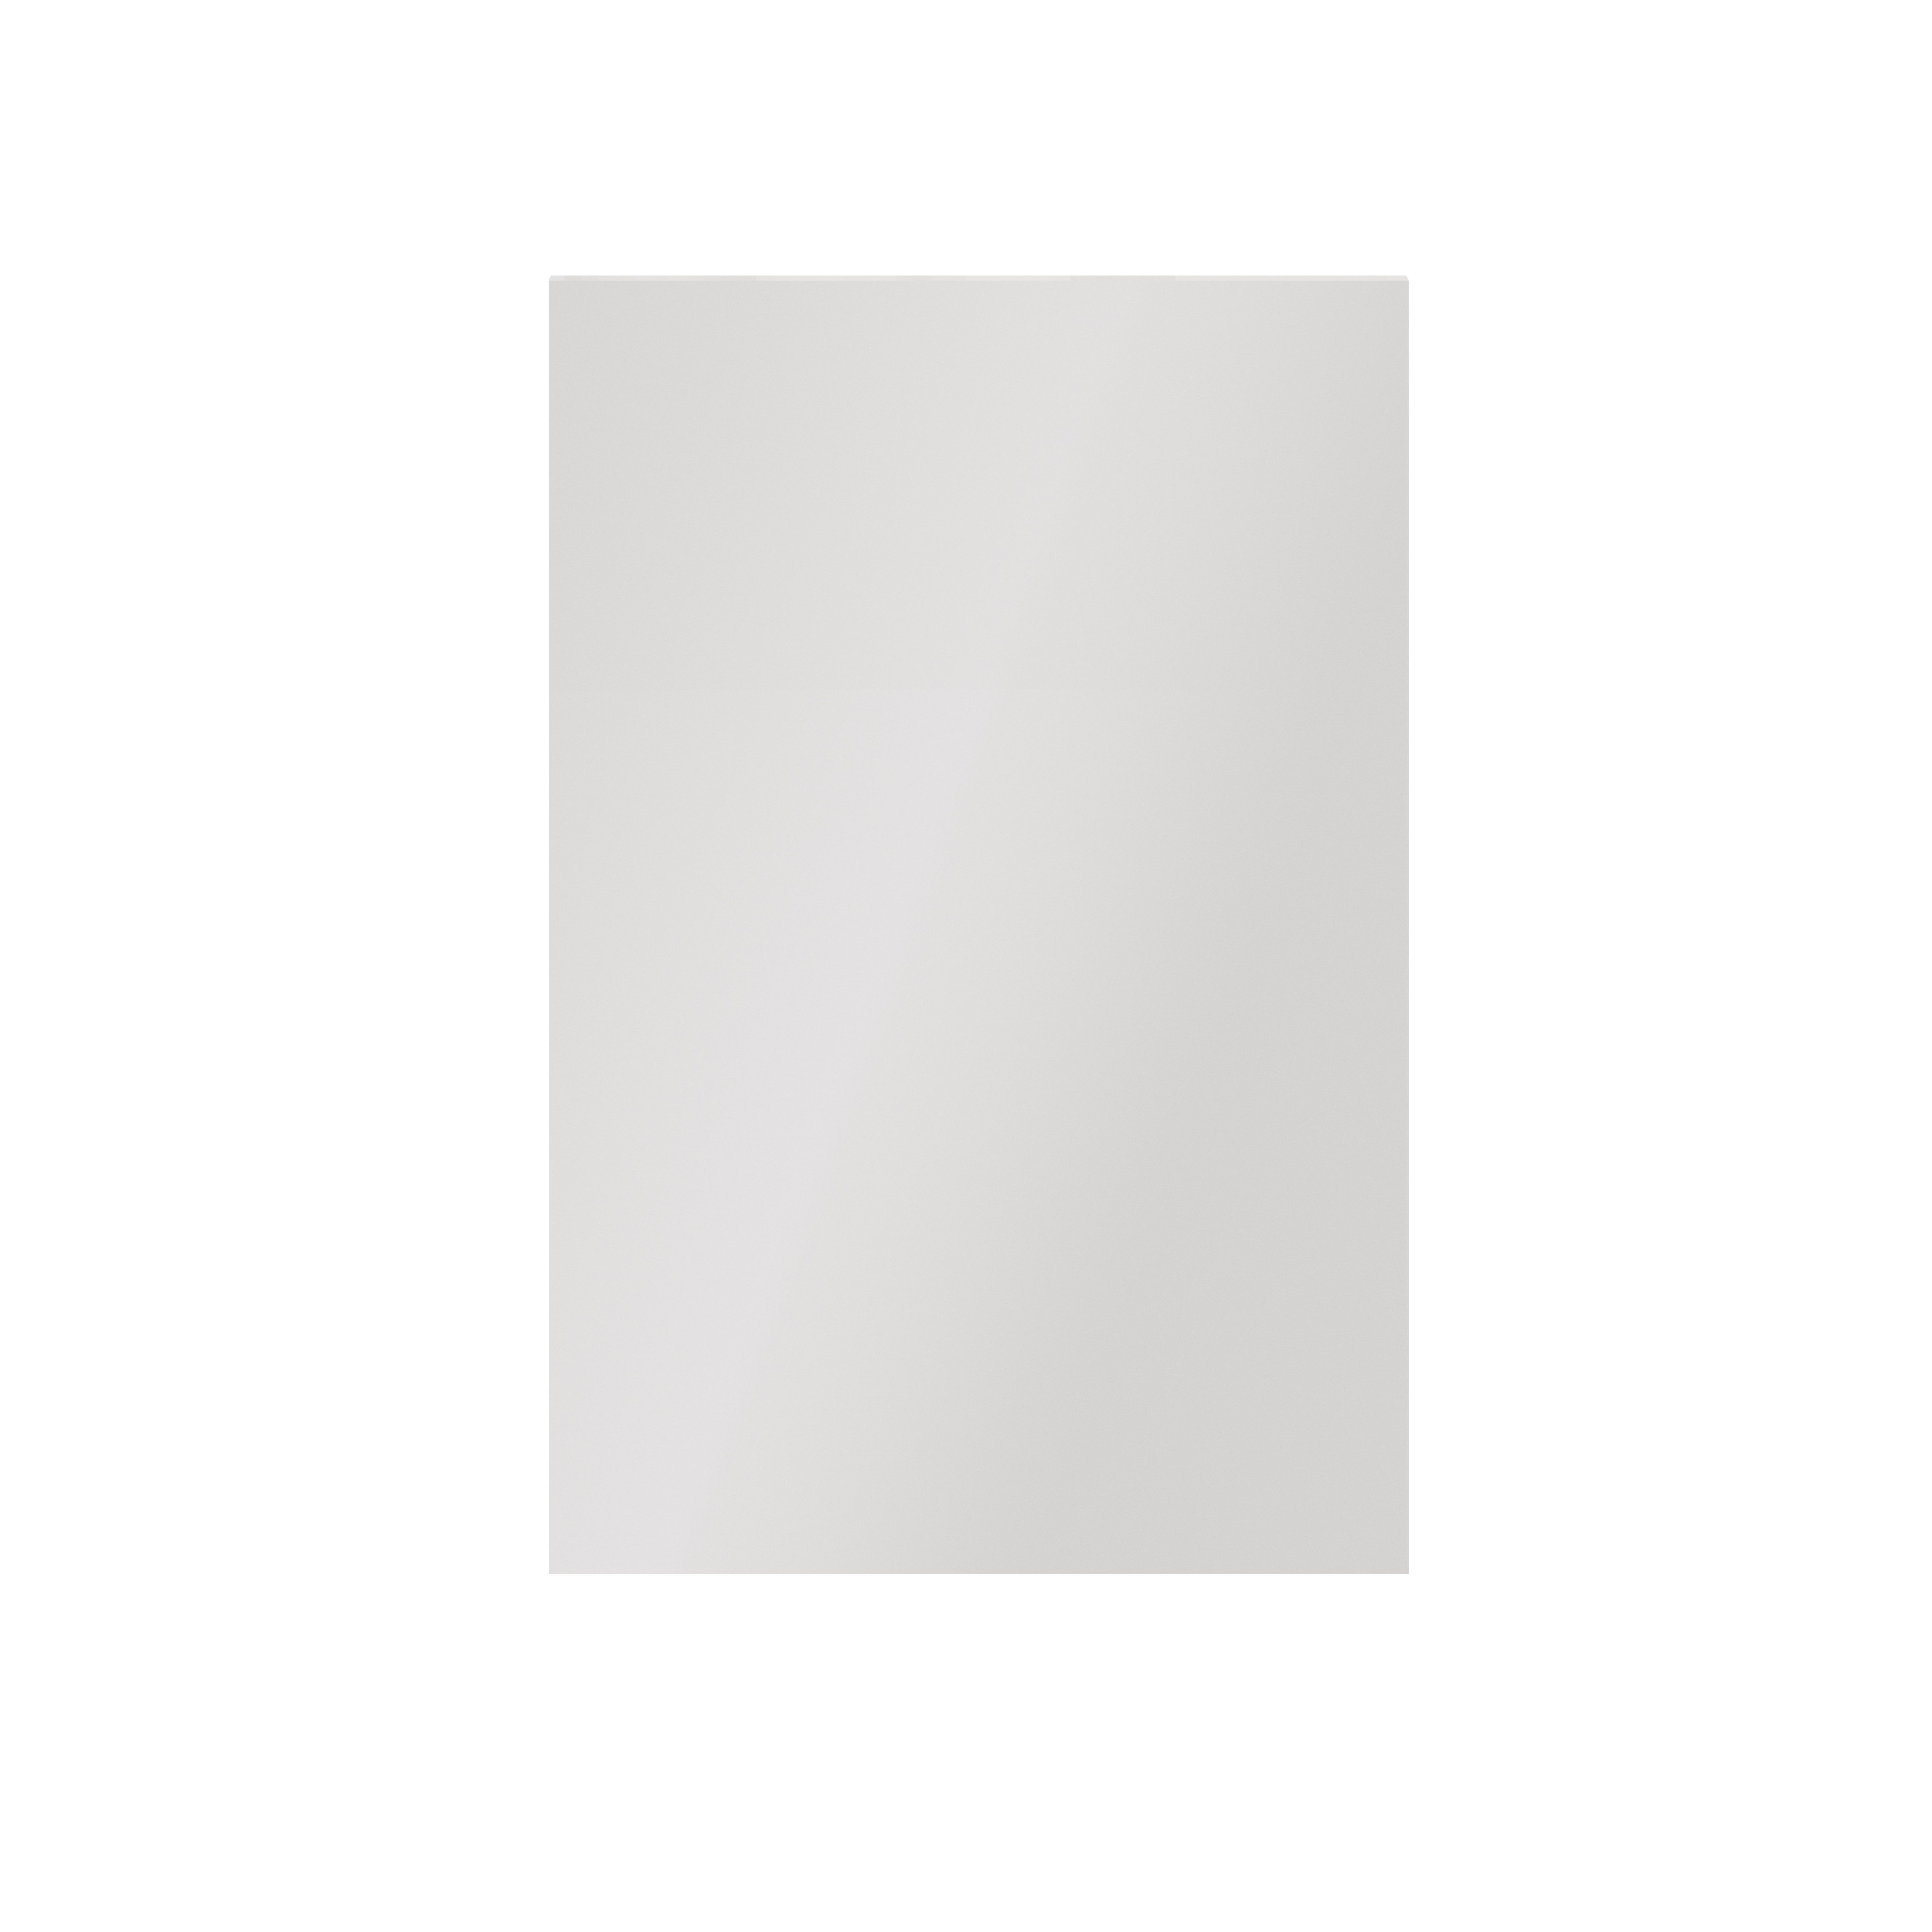 GoodHome Atomia Gloss White Non-mirrored Modular furniture door, (H) 747mm (W) 497mm